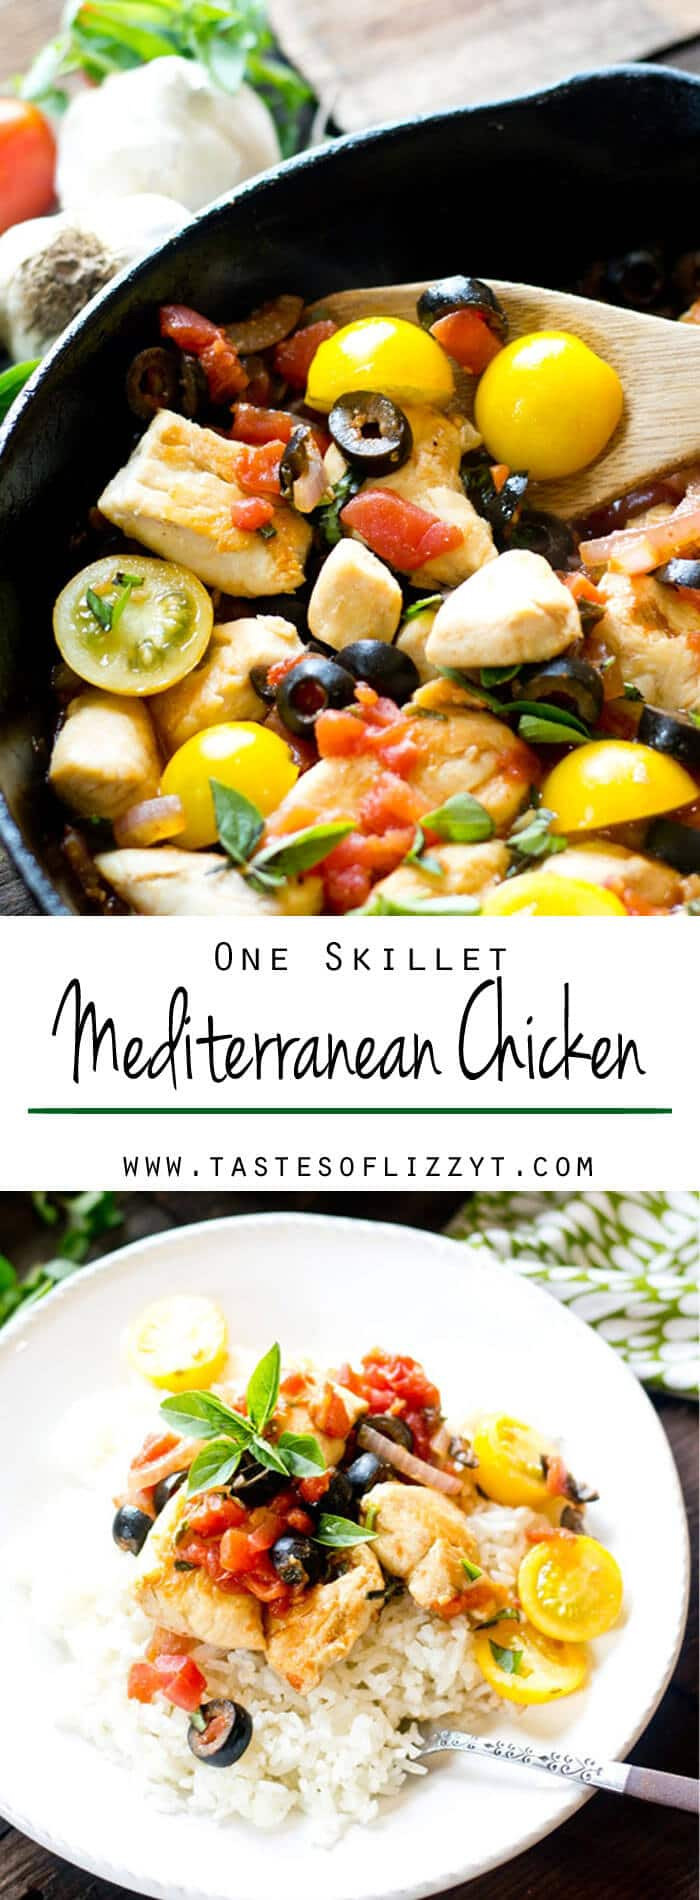 35 Ideas for Mediterranean Dinner Recipe - Best Recipes Ideas and